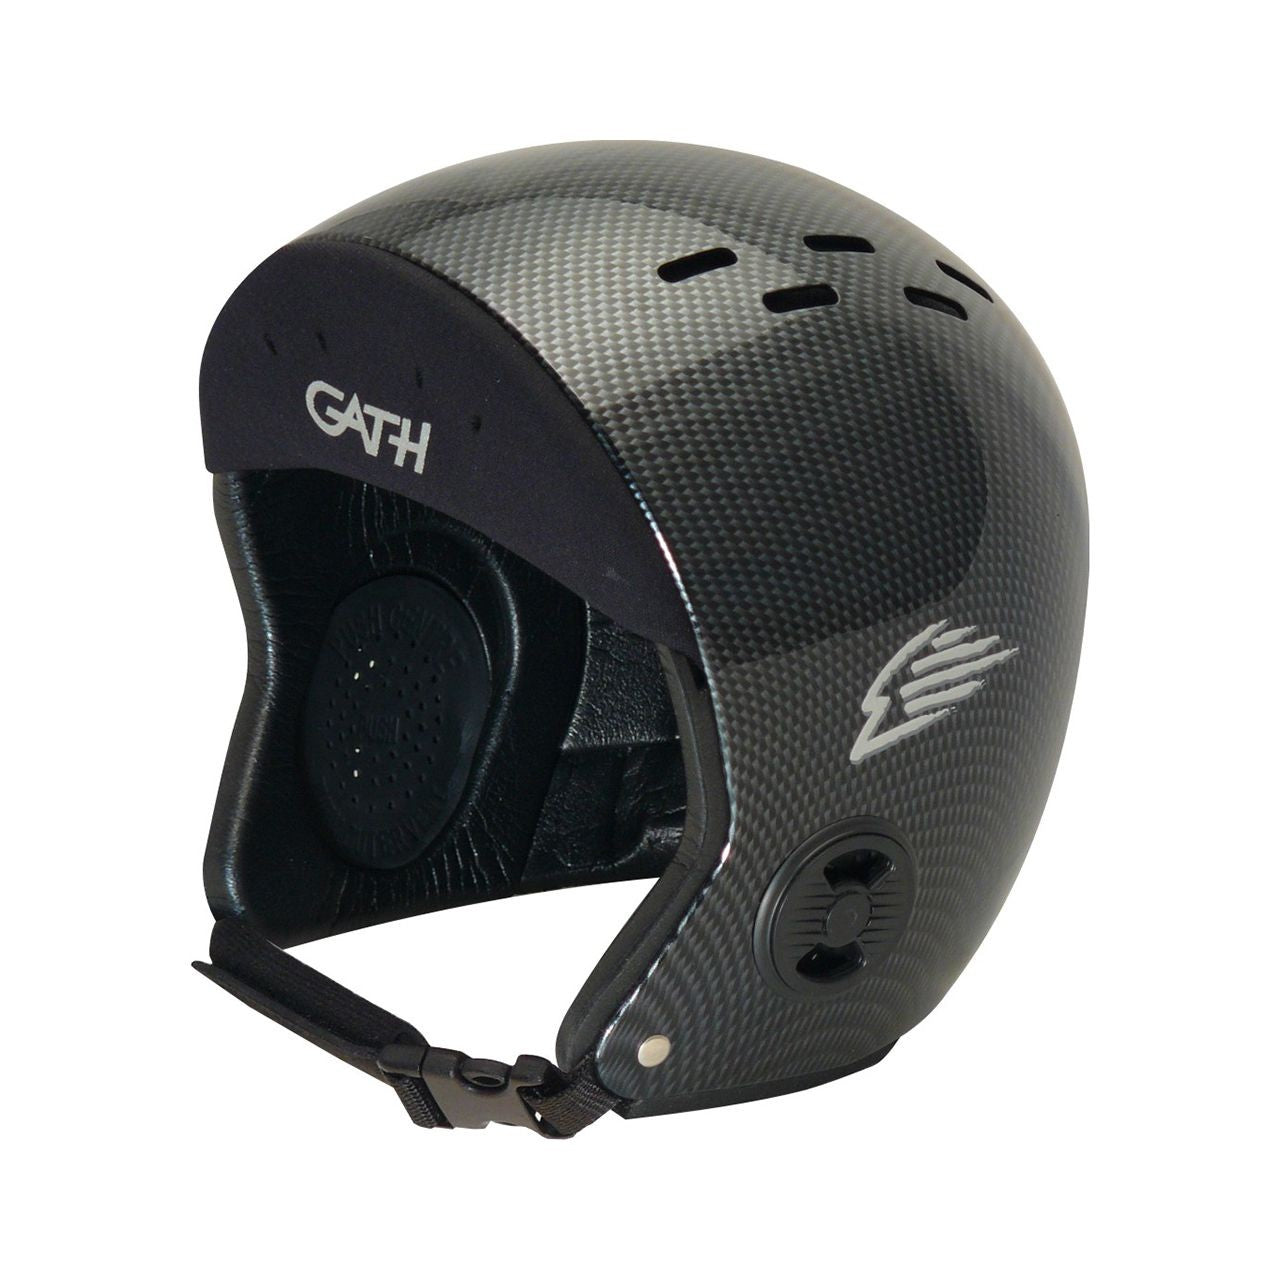 GATH Helmet - Hat NEO (Neoprene Headband)